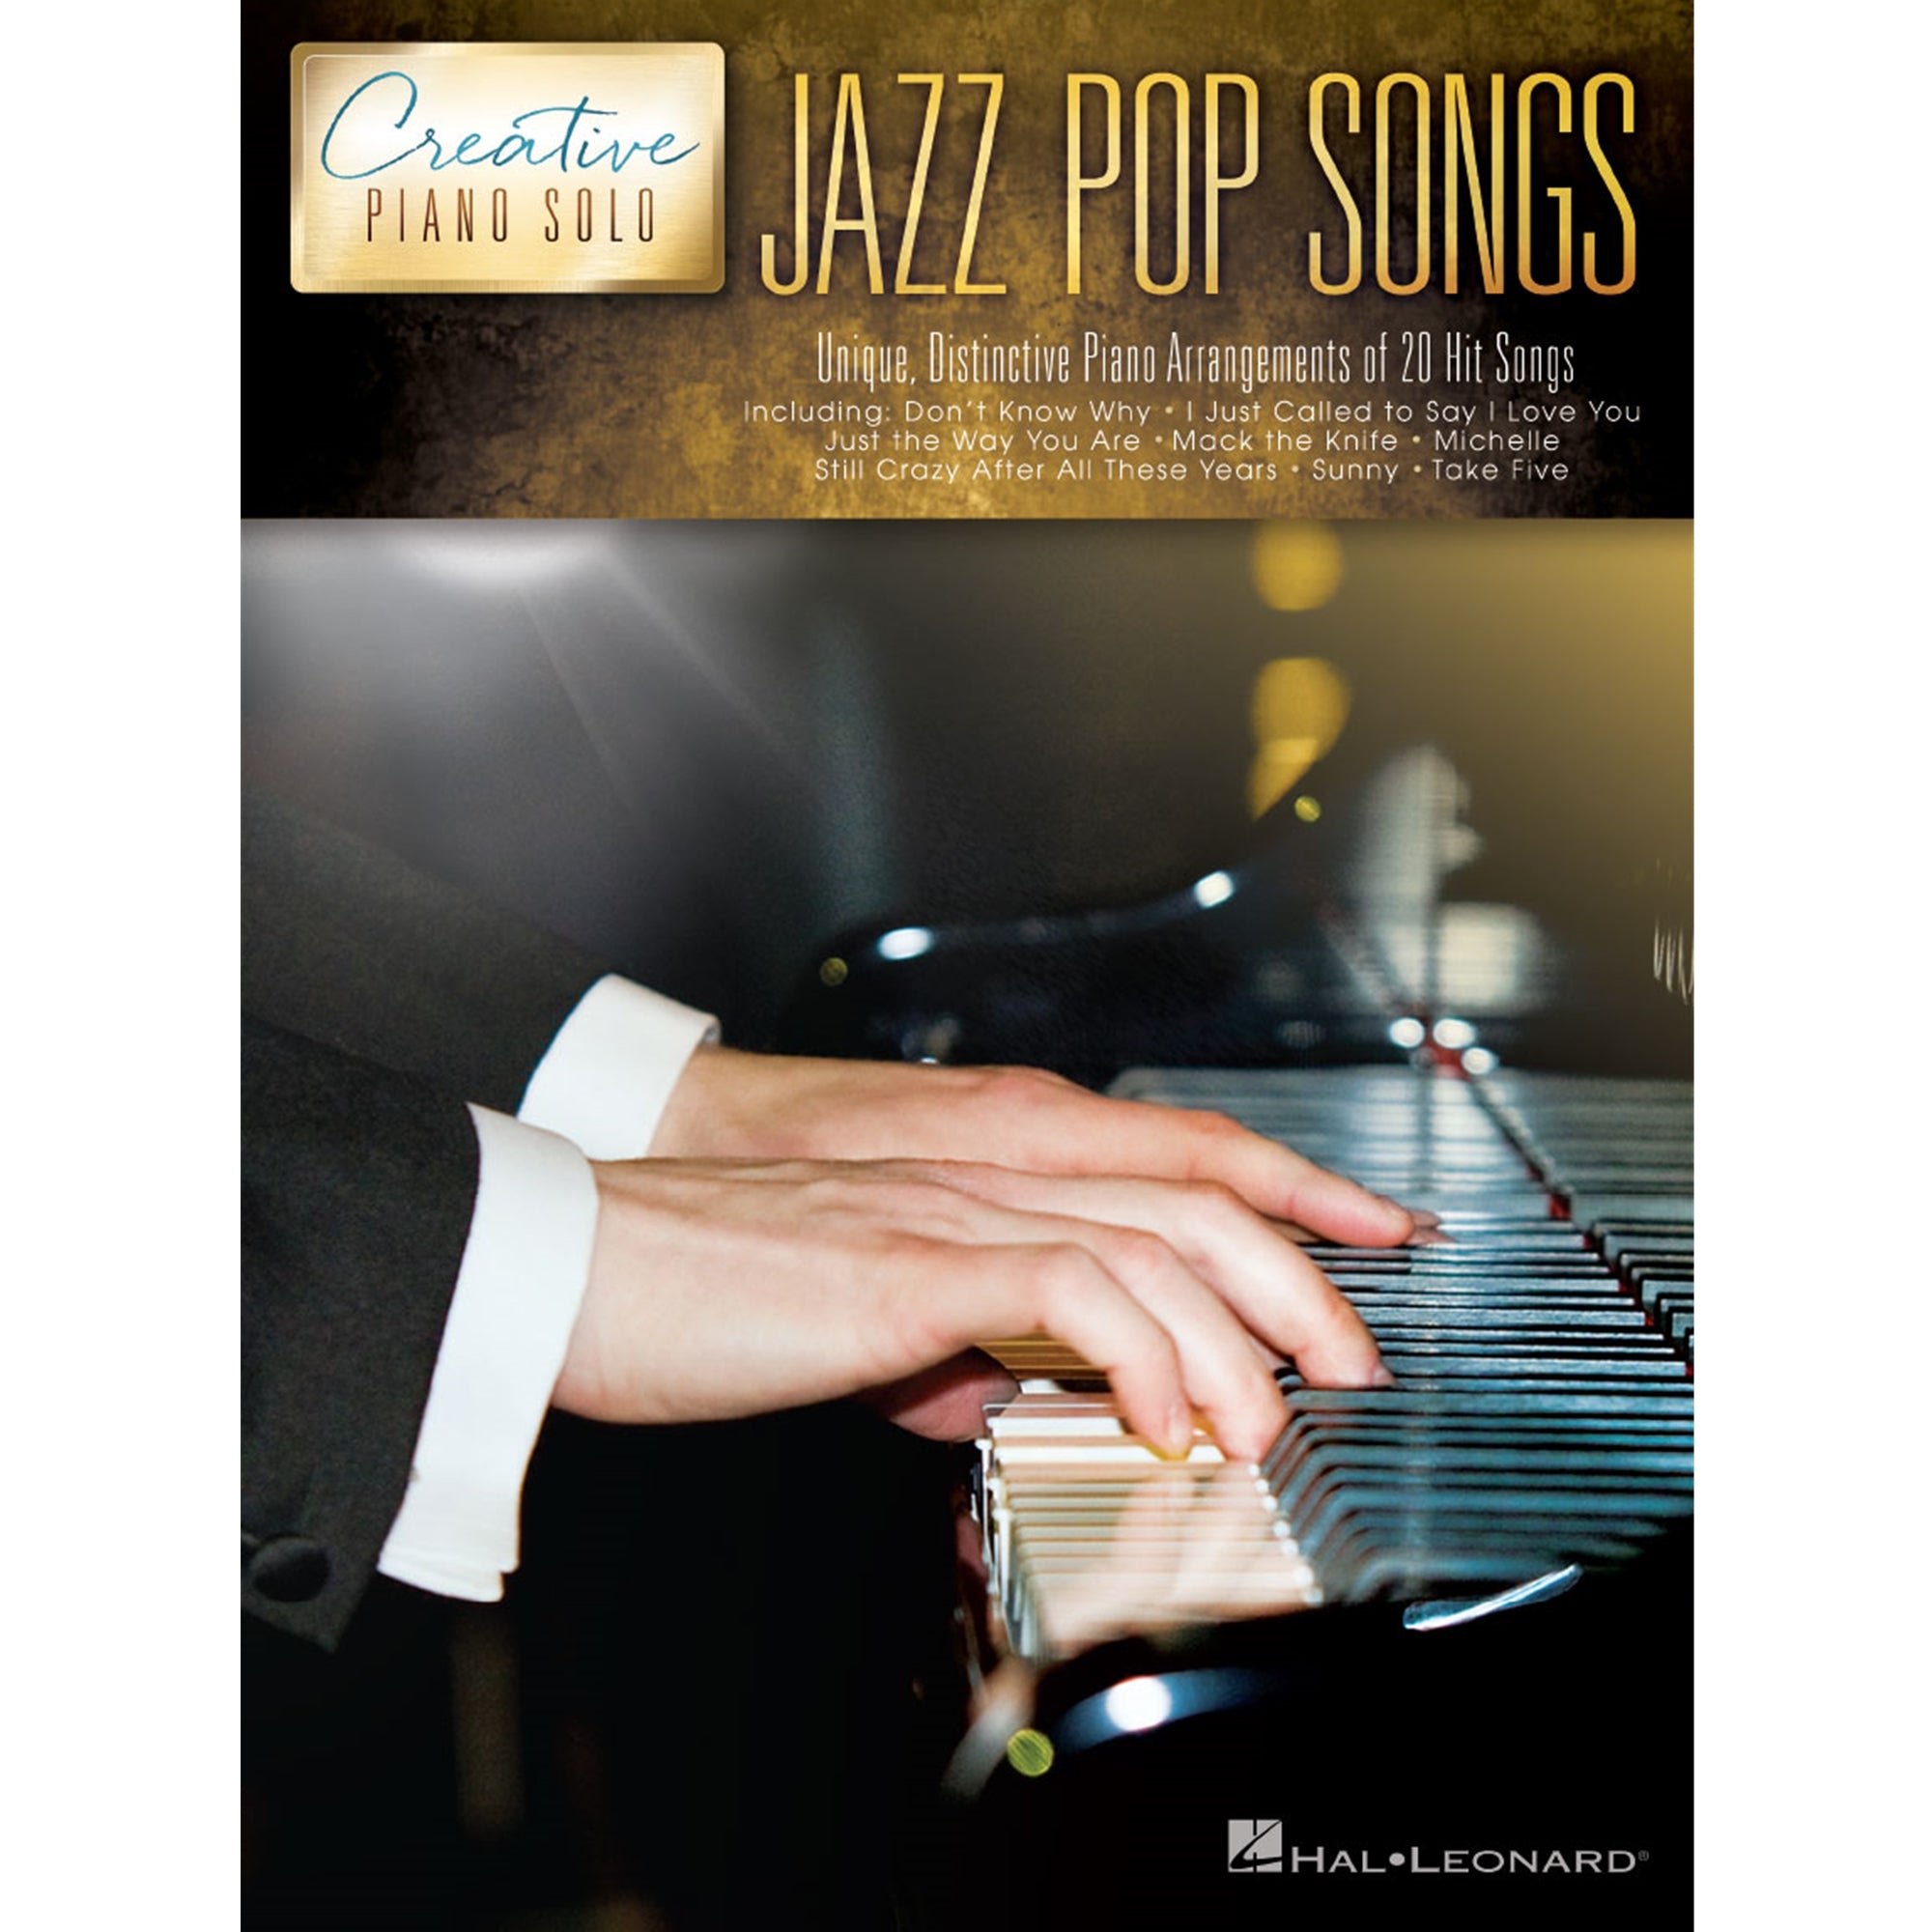 HAL LEONARD Jazz Pop Songs - Creative Piano Solo - Ray's Midbell Music